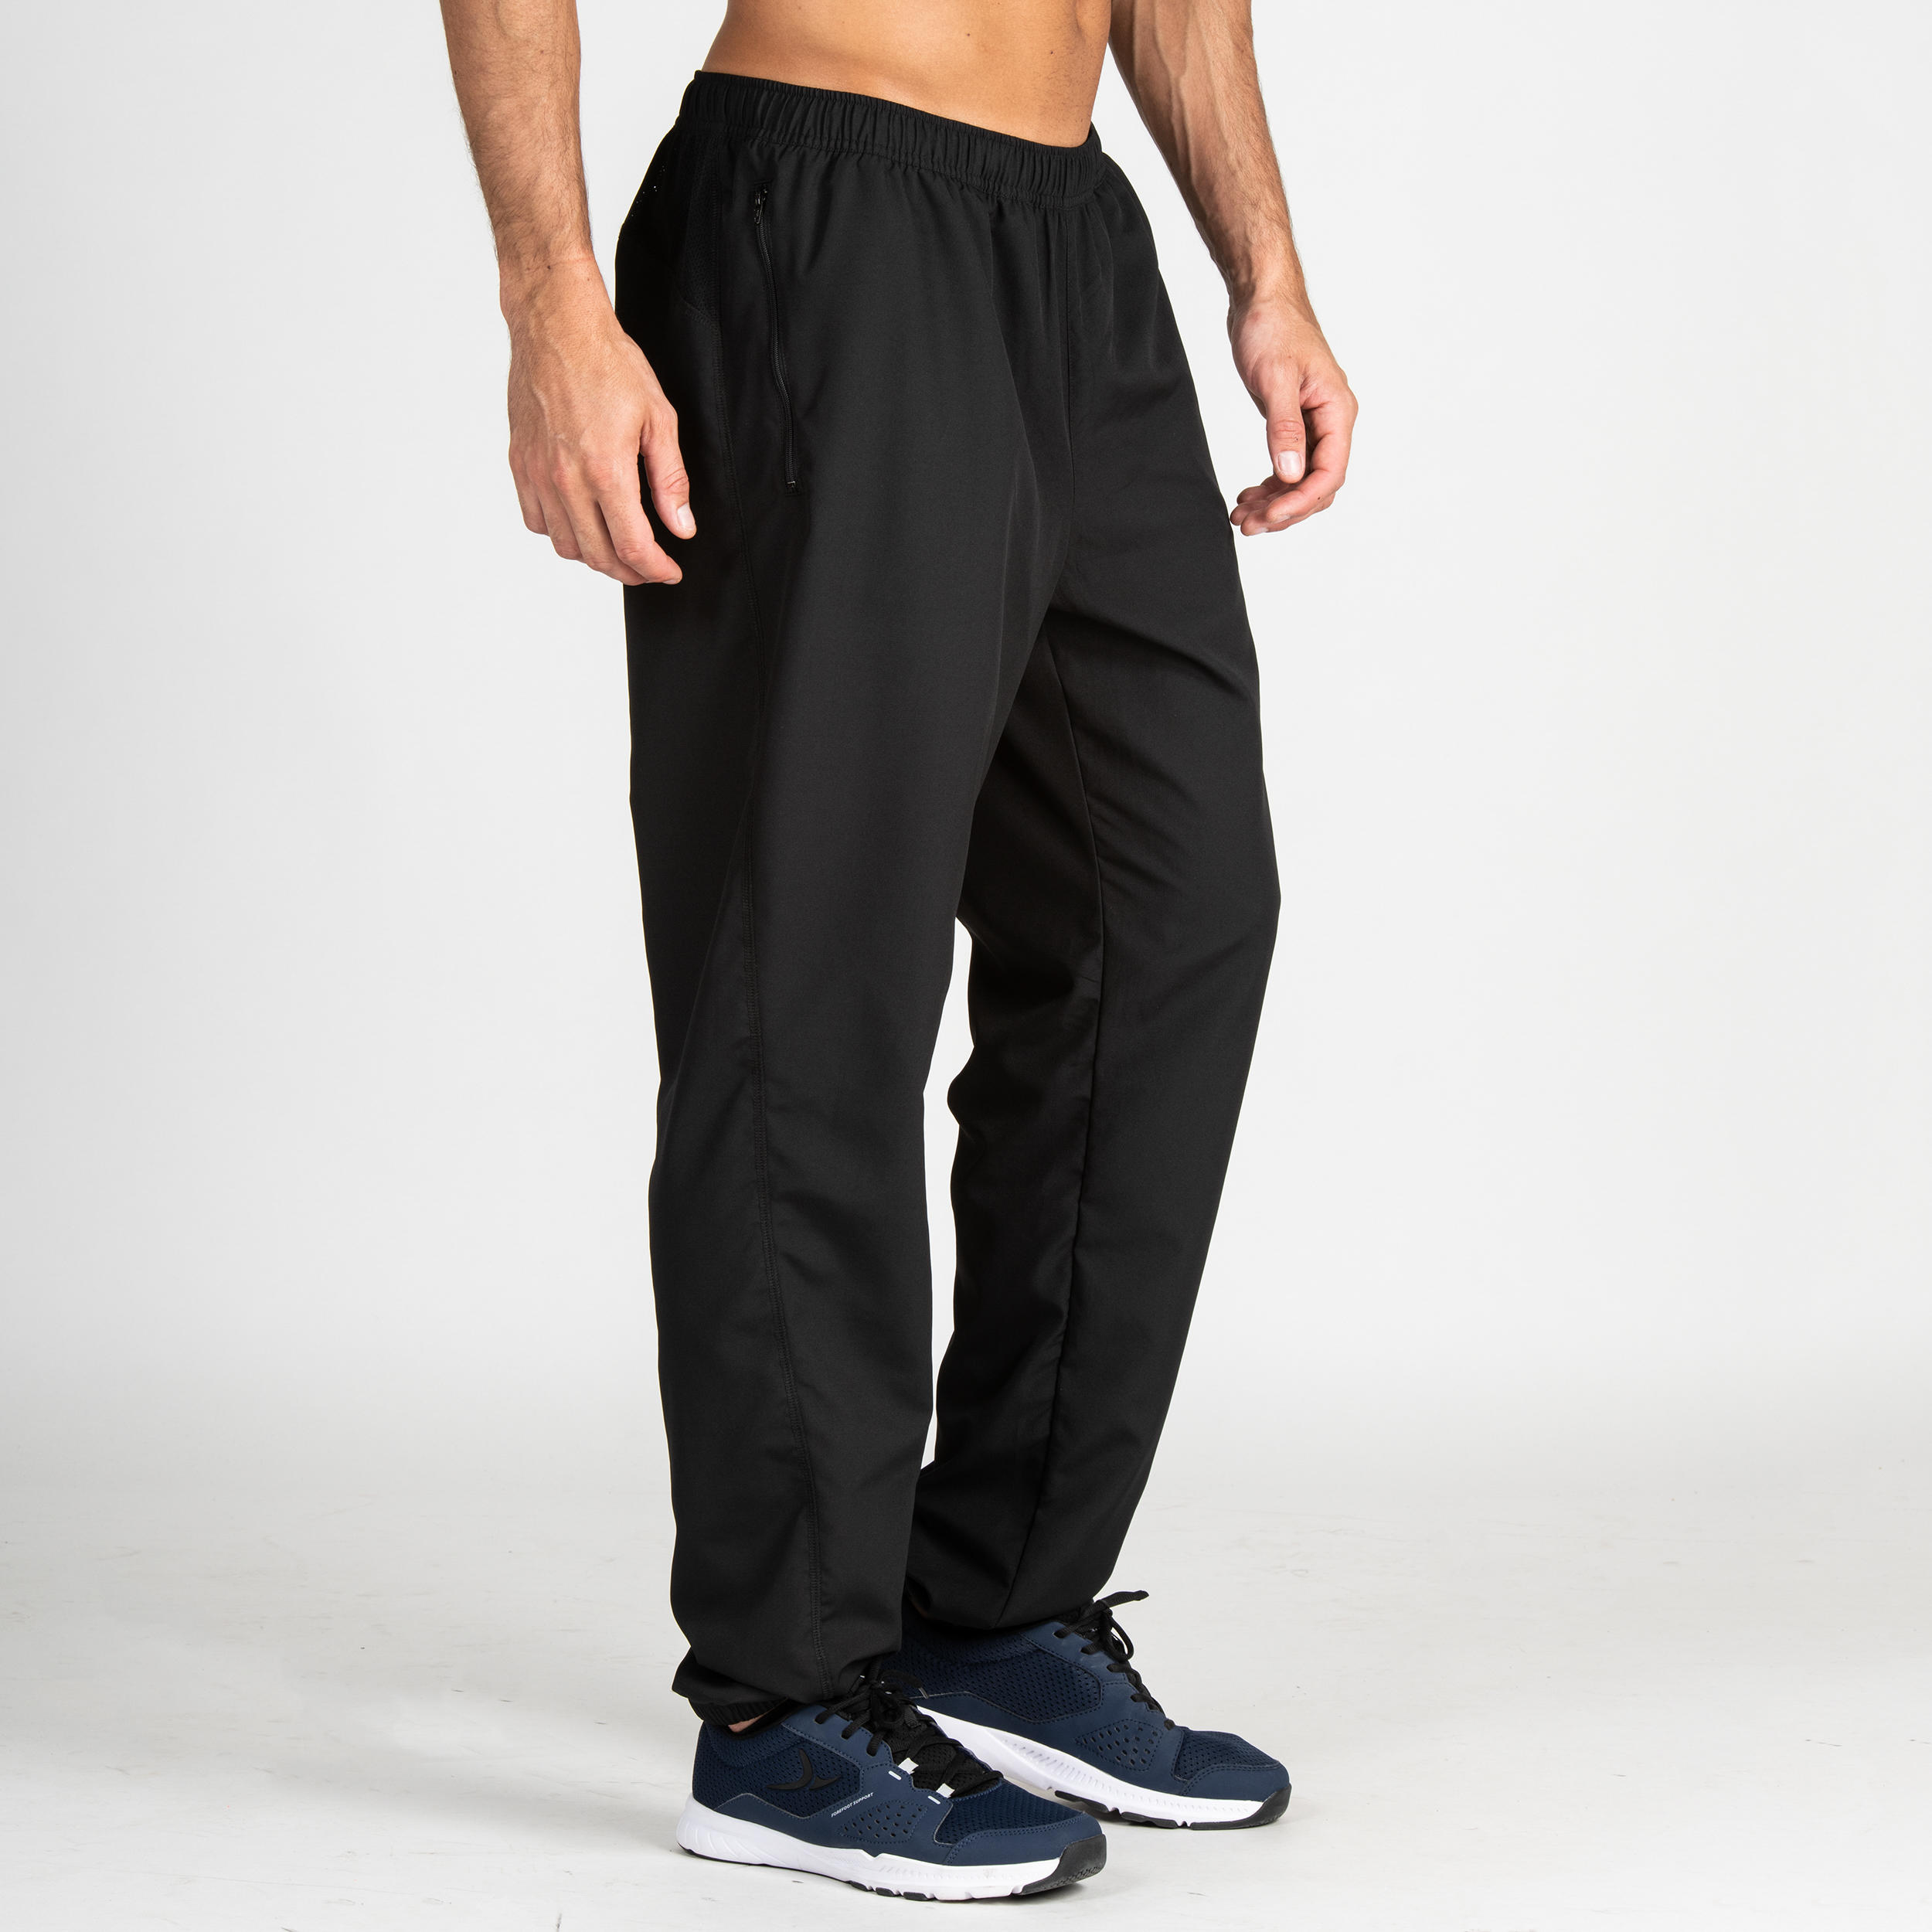 Decathlon Fitness Cardio Men Breathable fitness collection bottoms - black  (Lightweight) - Domyos | Lazada